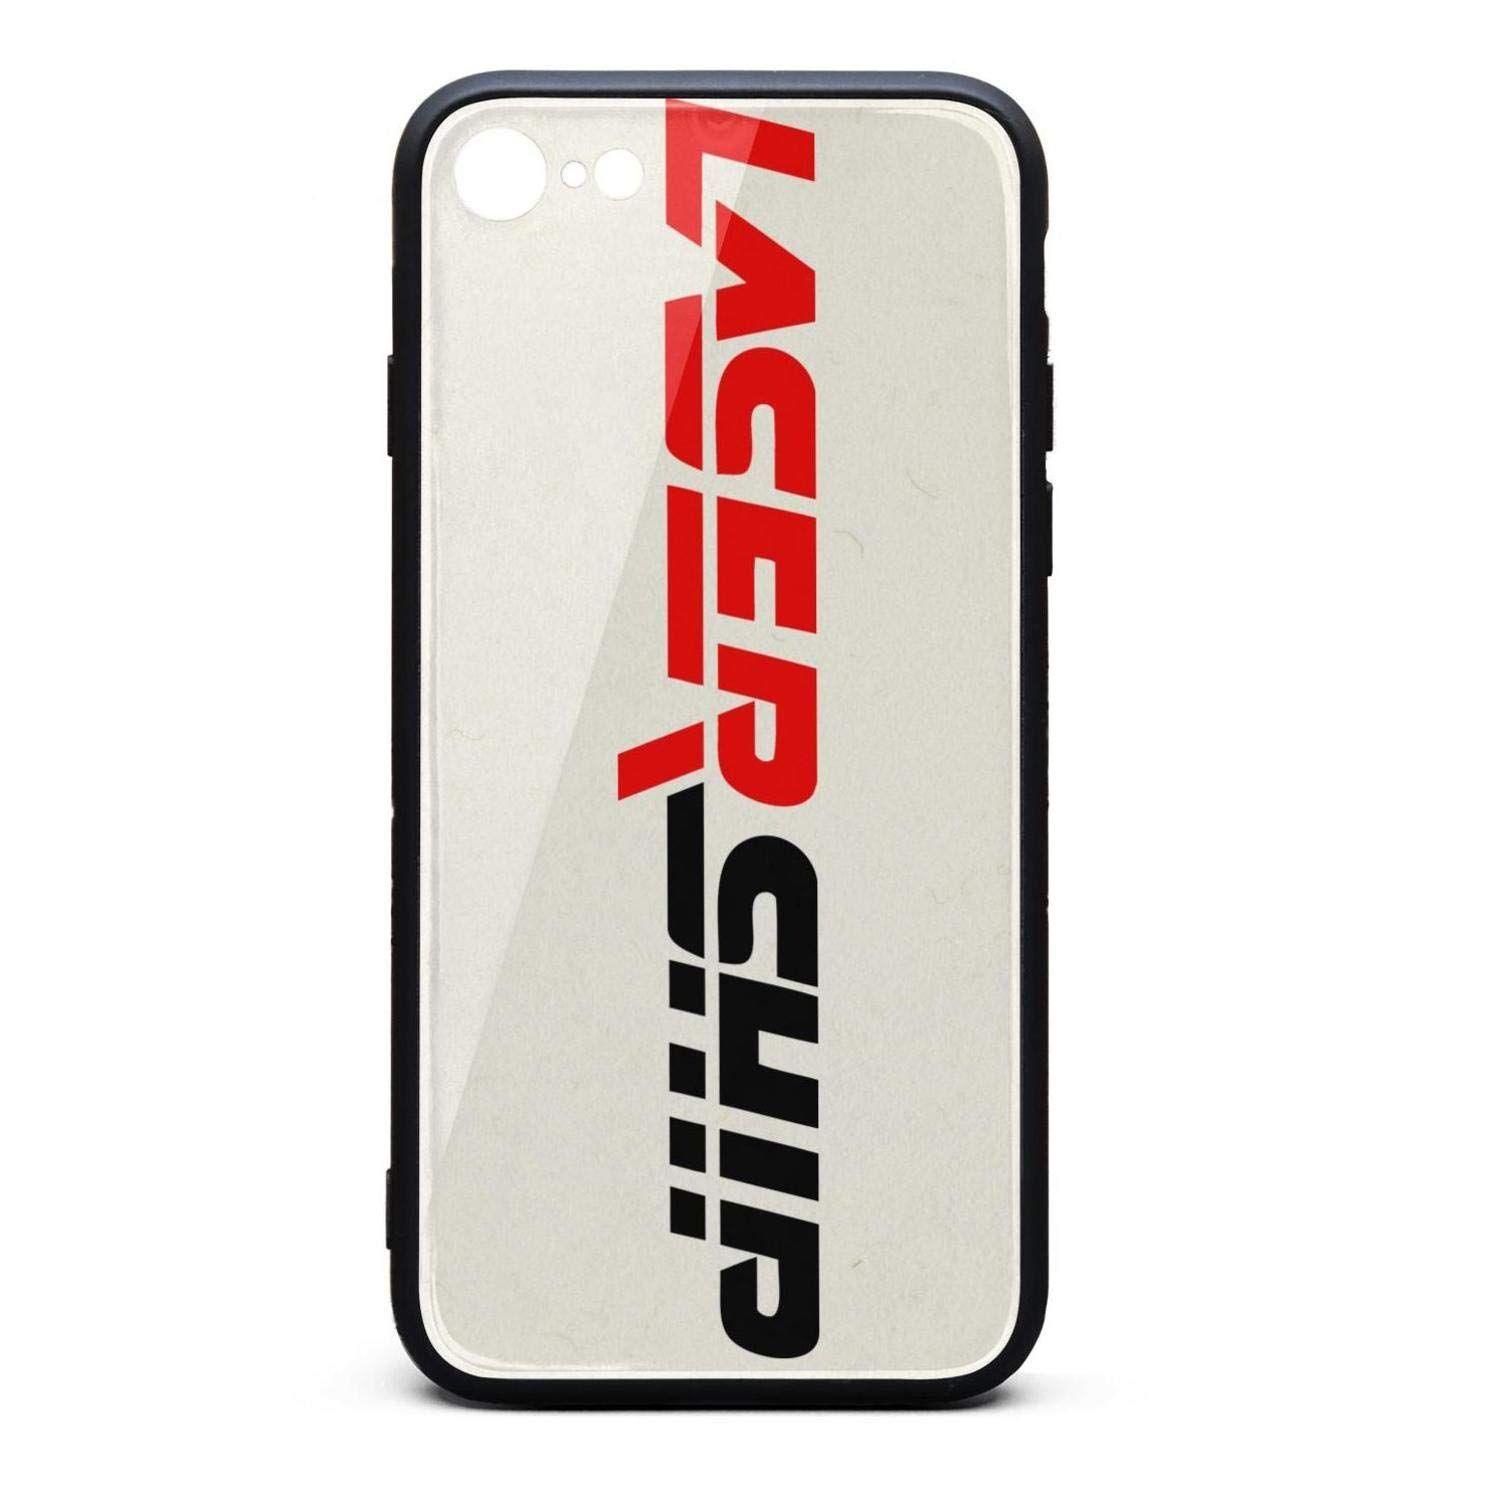 LaserShip Logo - I Phone 6 6s Case Protective Case Anti Scratch LaserShip